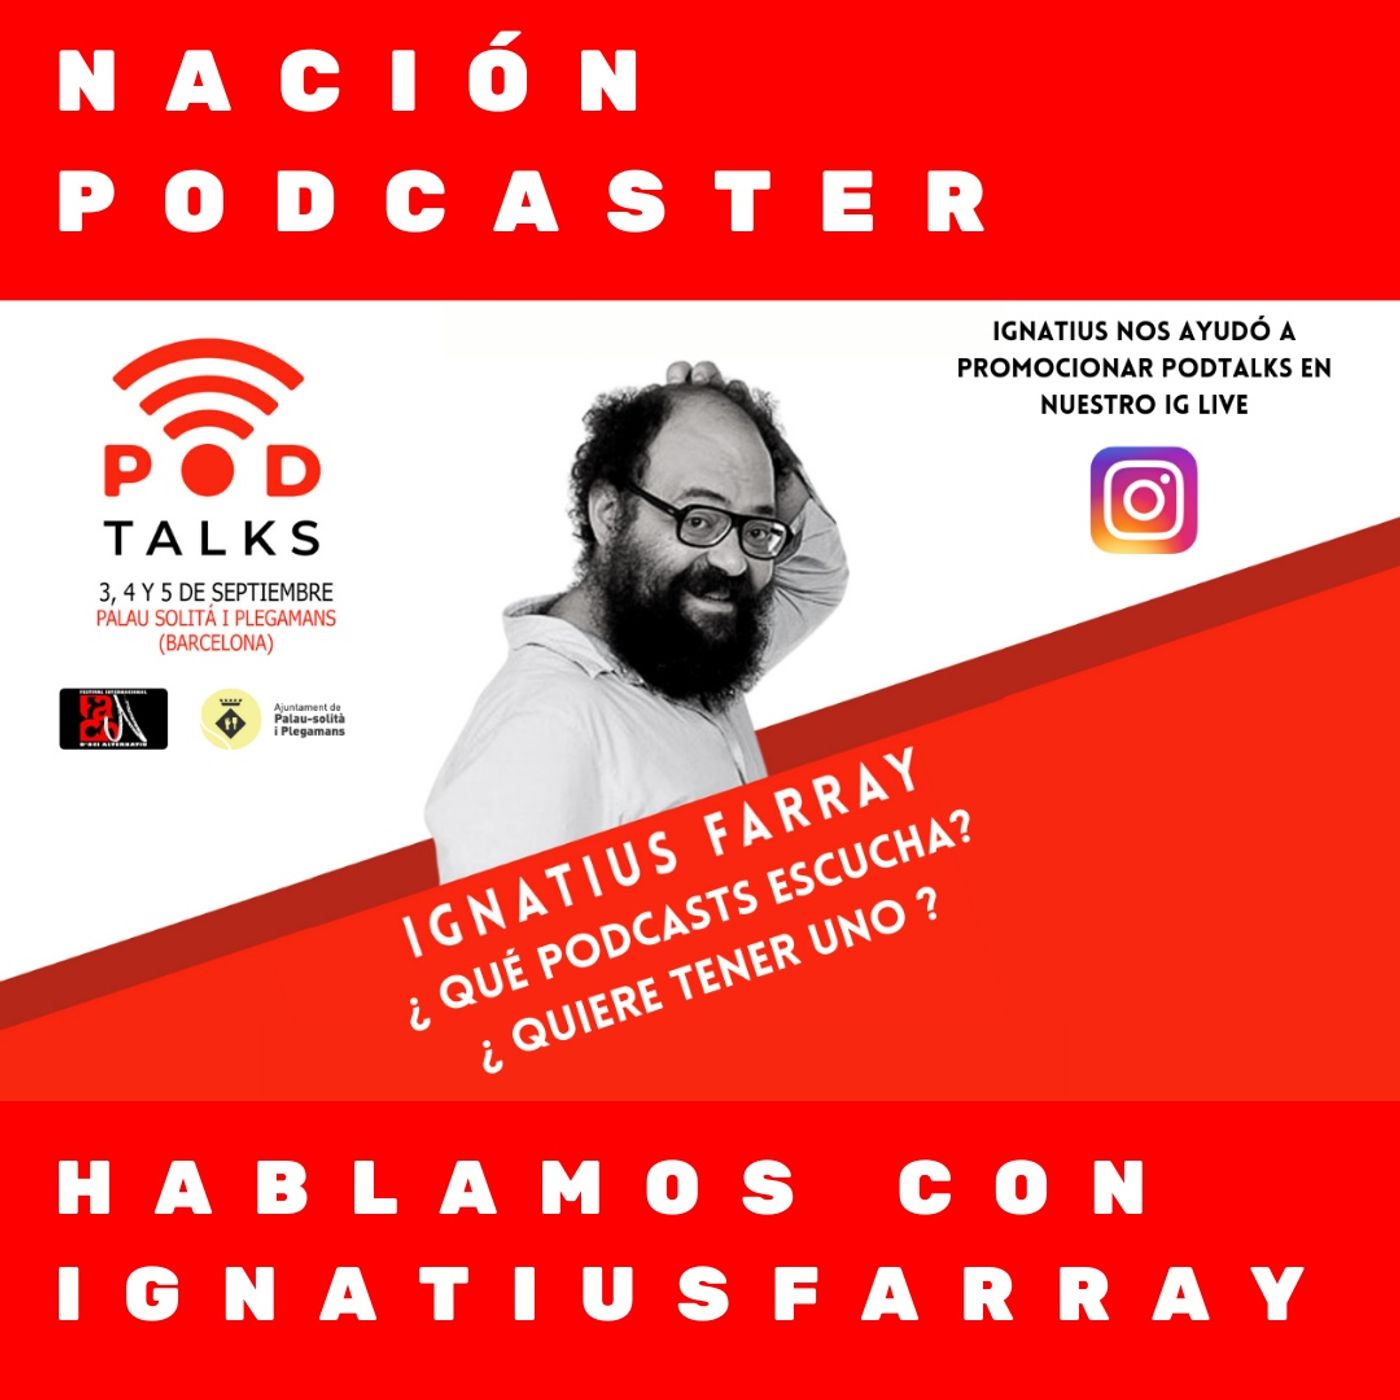 Hablamos con Ignatius Farray sobre podcasting @IgnatiusFarray